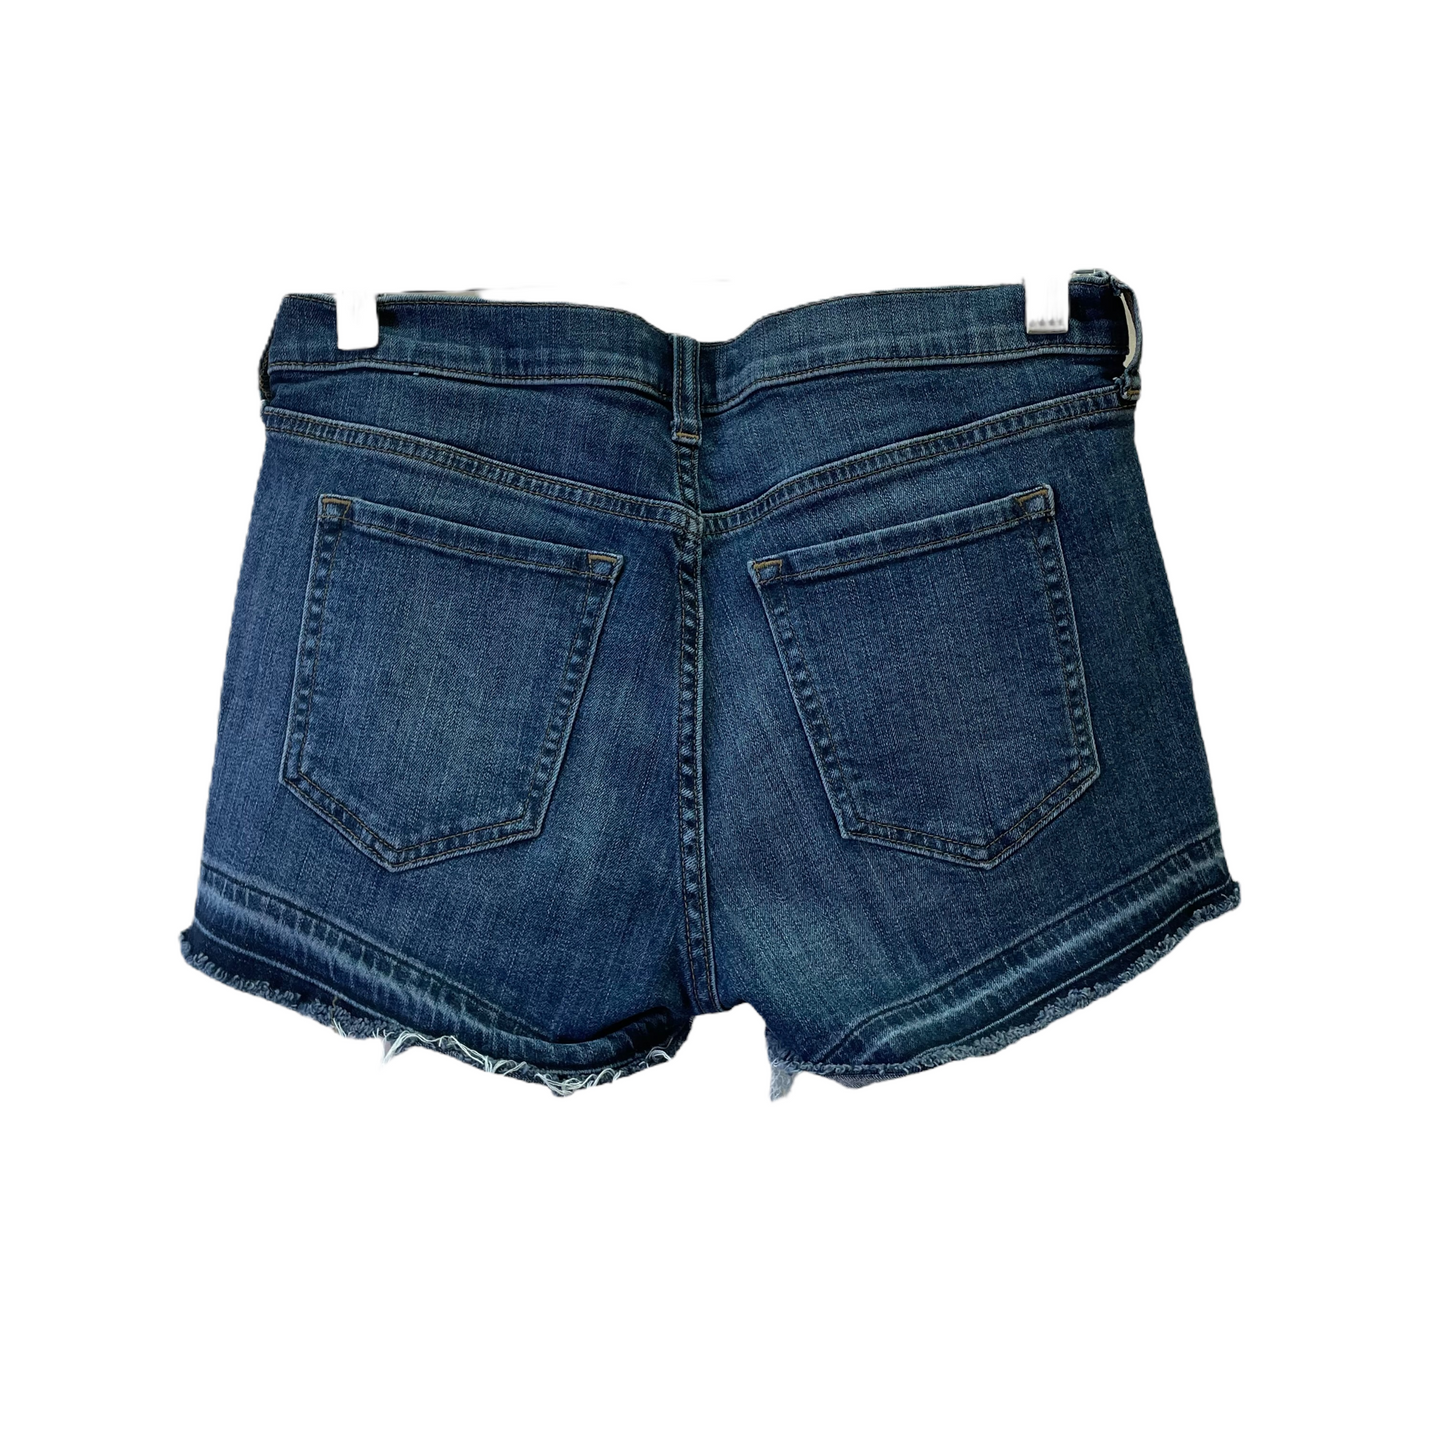 Blue Denim Shorts By Banana Republic, Size: 2